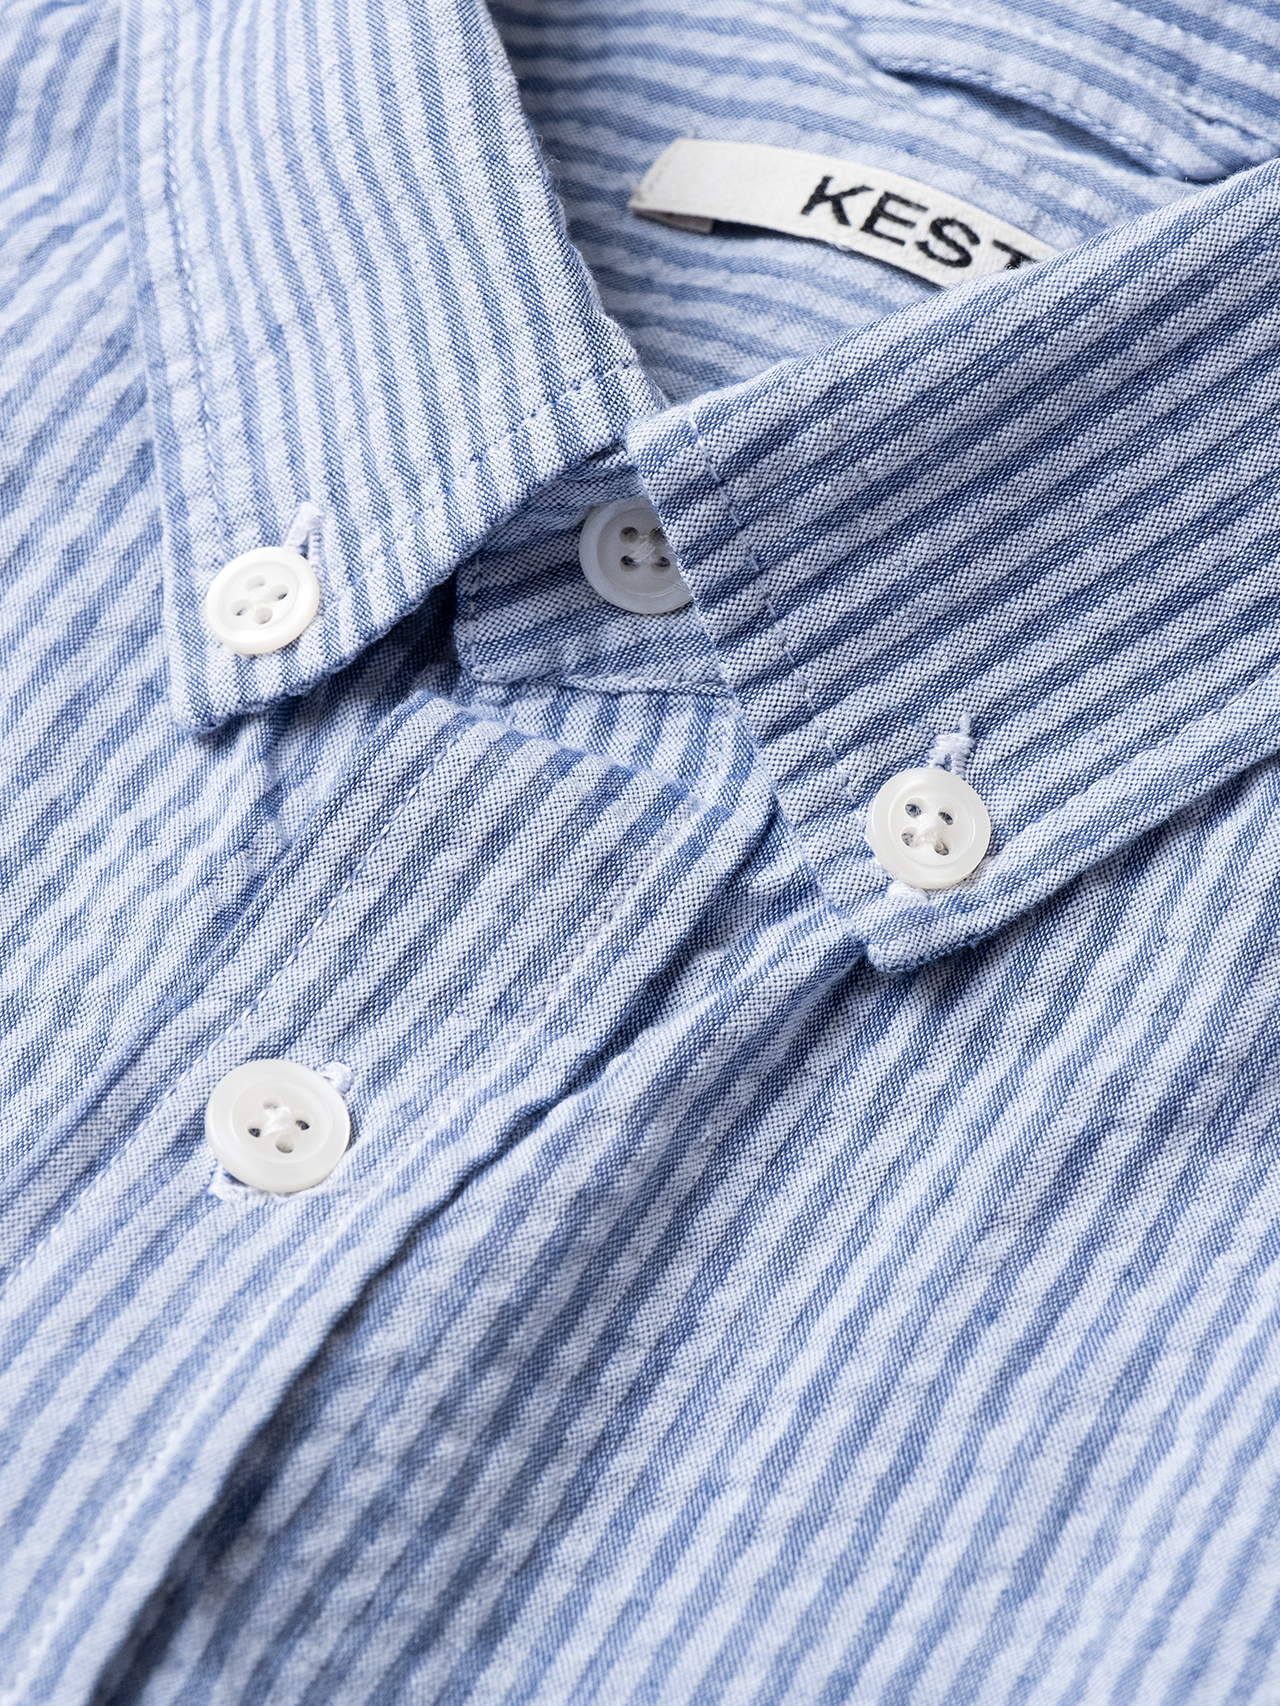 A close-up of a buttoned shirt collar from designer men's brand KESTIN, with a blue striped seersucker material.